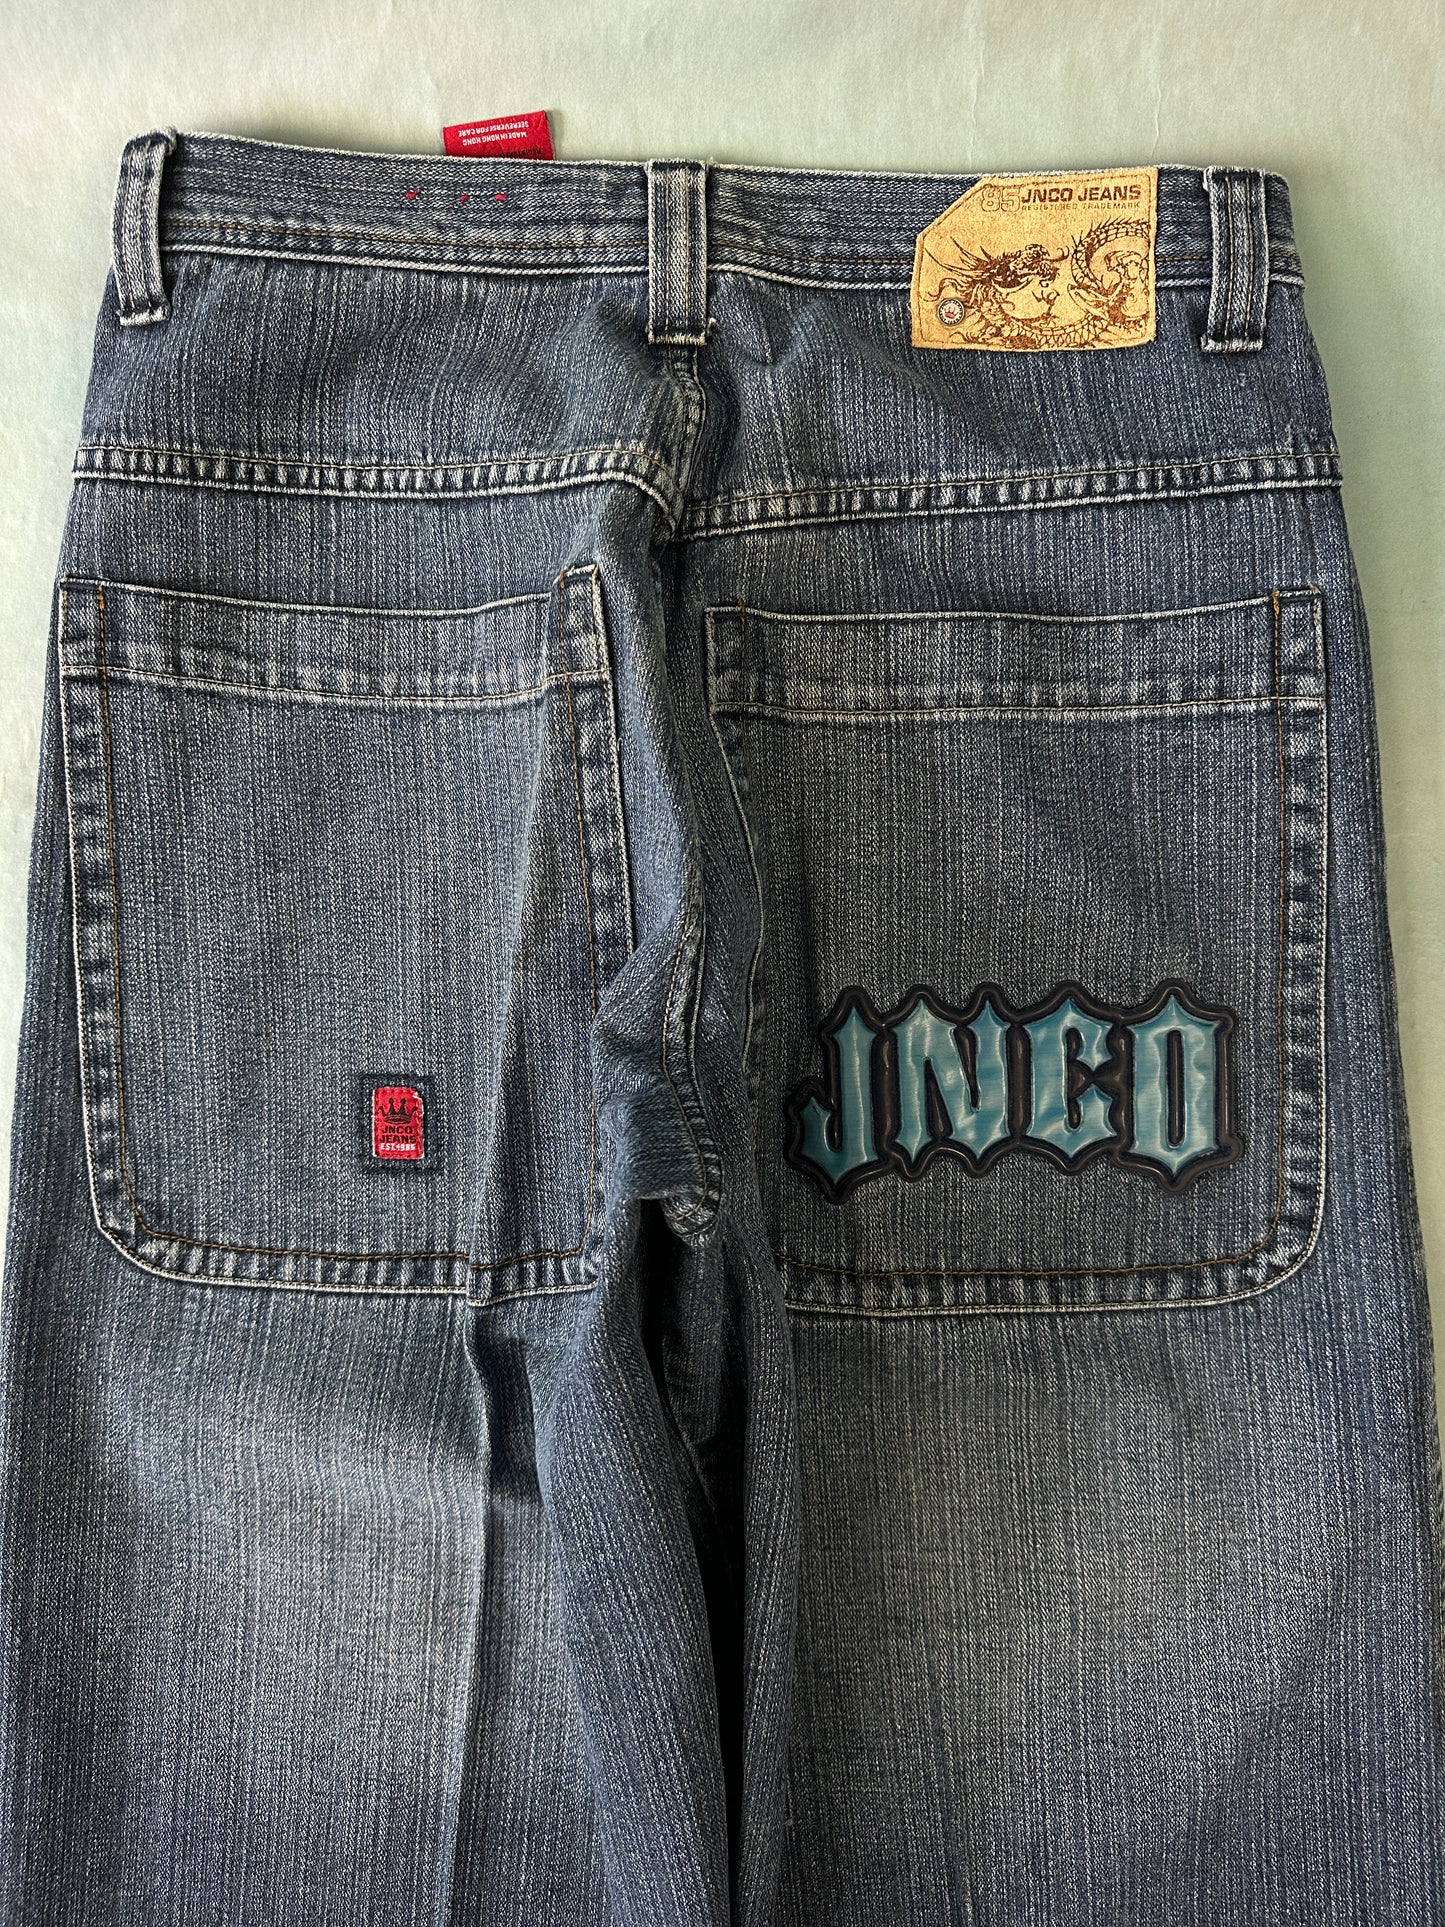 JNCO Spellout Logo Vintage Baggy Jeans - 33 x 30